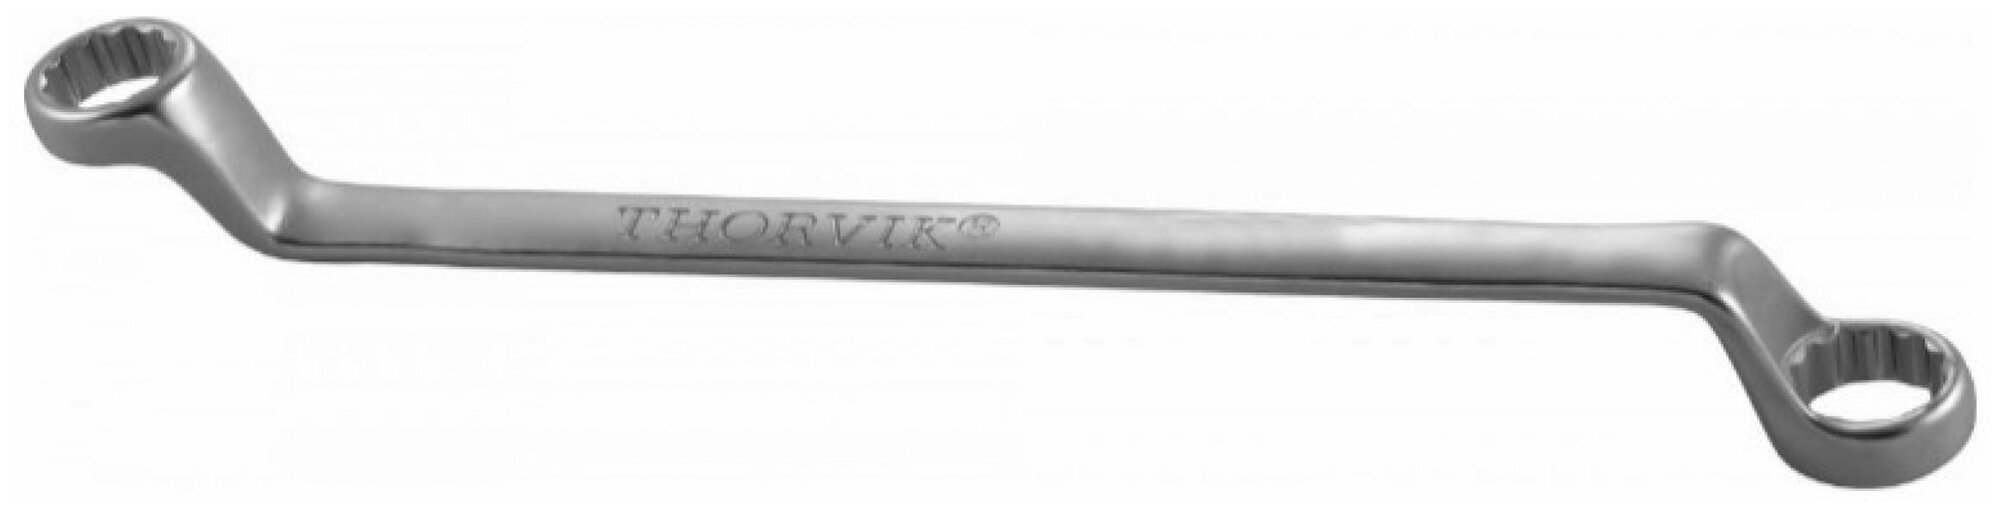 W22224 Ключ гаечный накидной изогнутый серии ARC, 22х24 мм